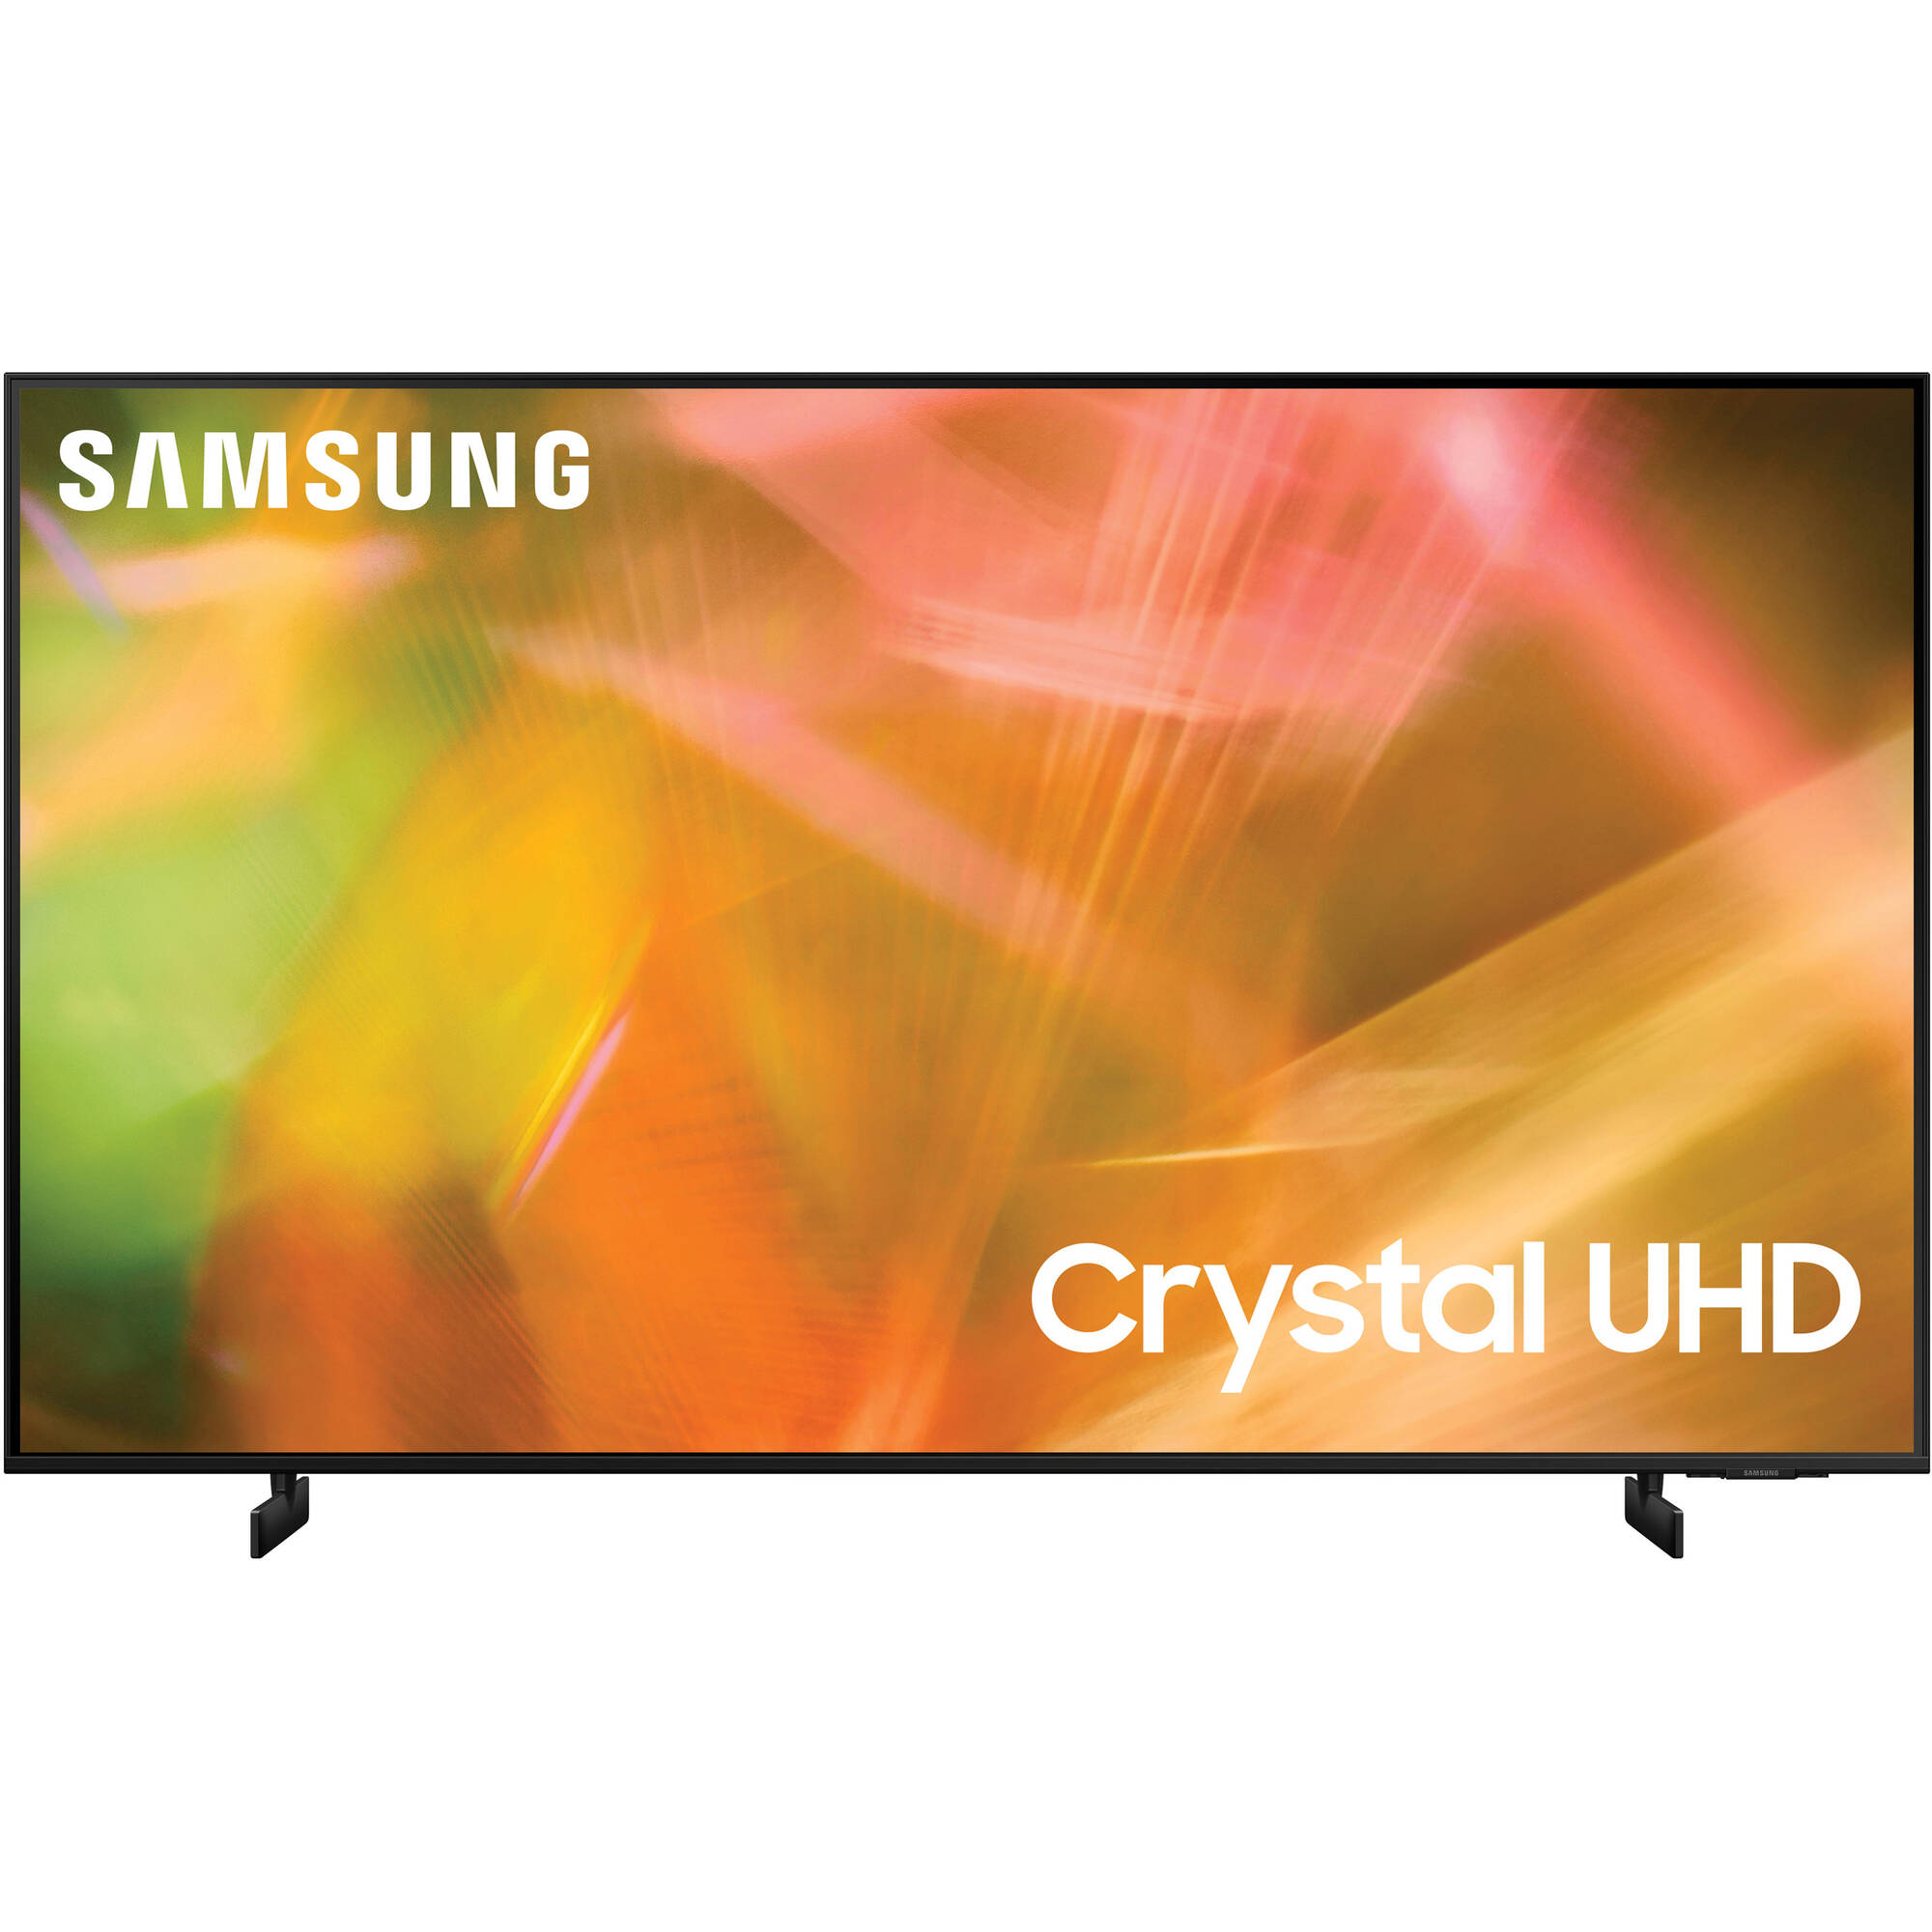 Samsung Au8000 43 "Clase HDR 4K UHD Smart LED TV